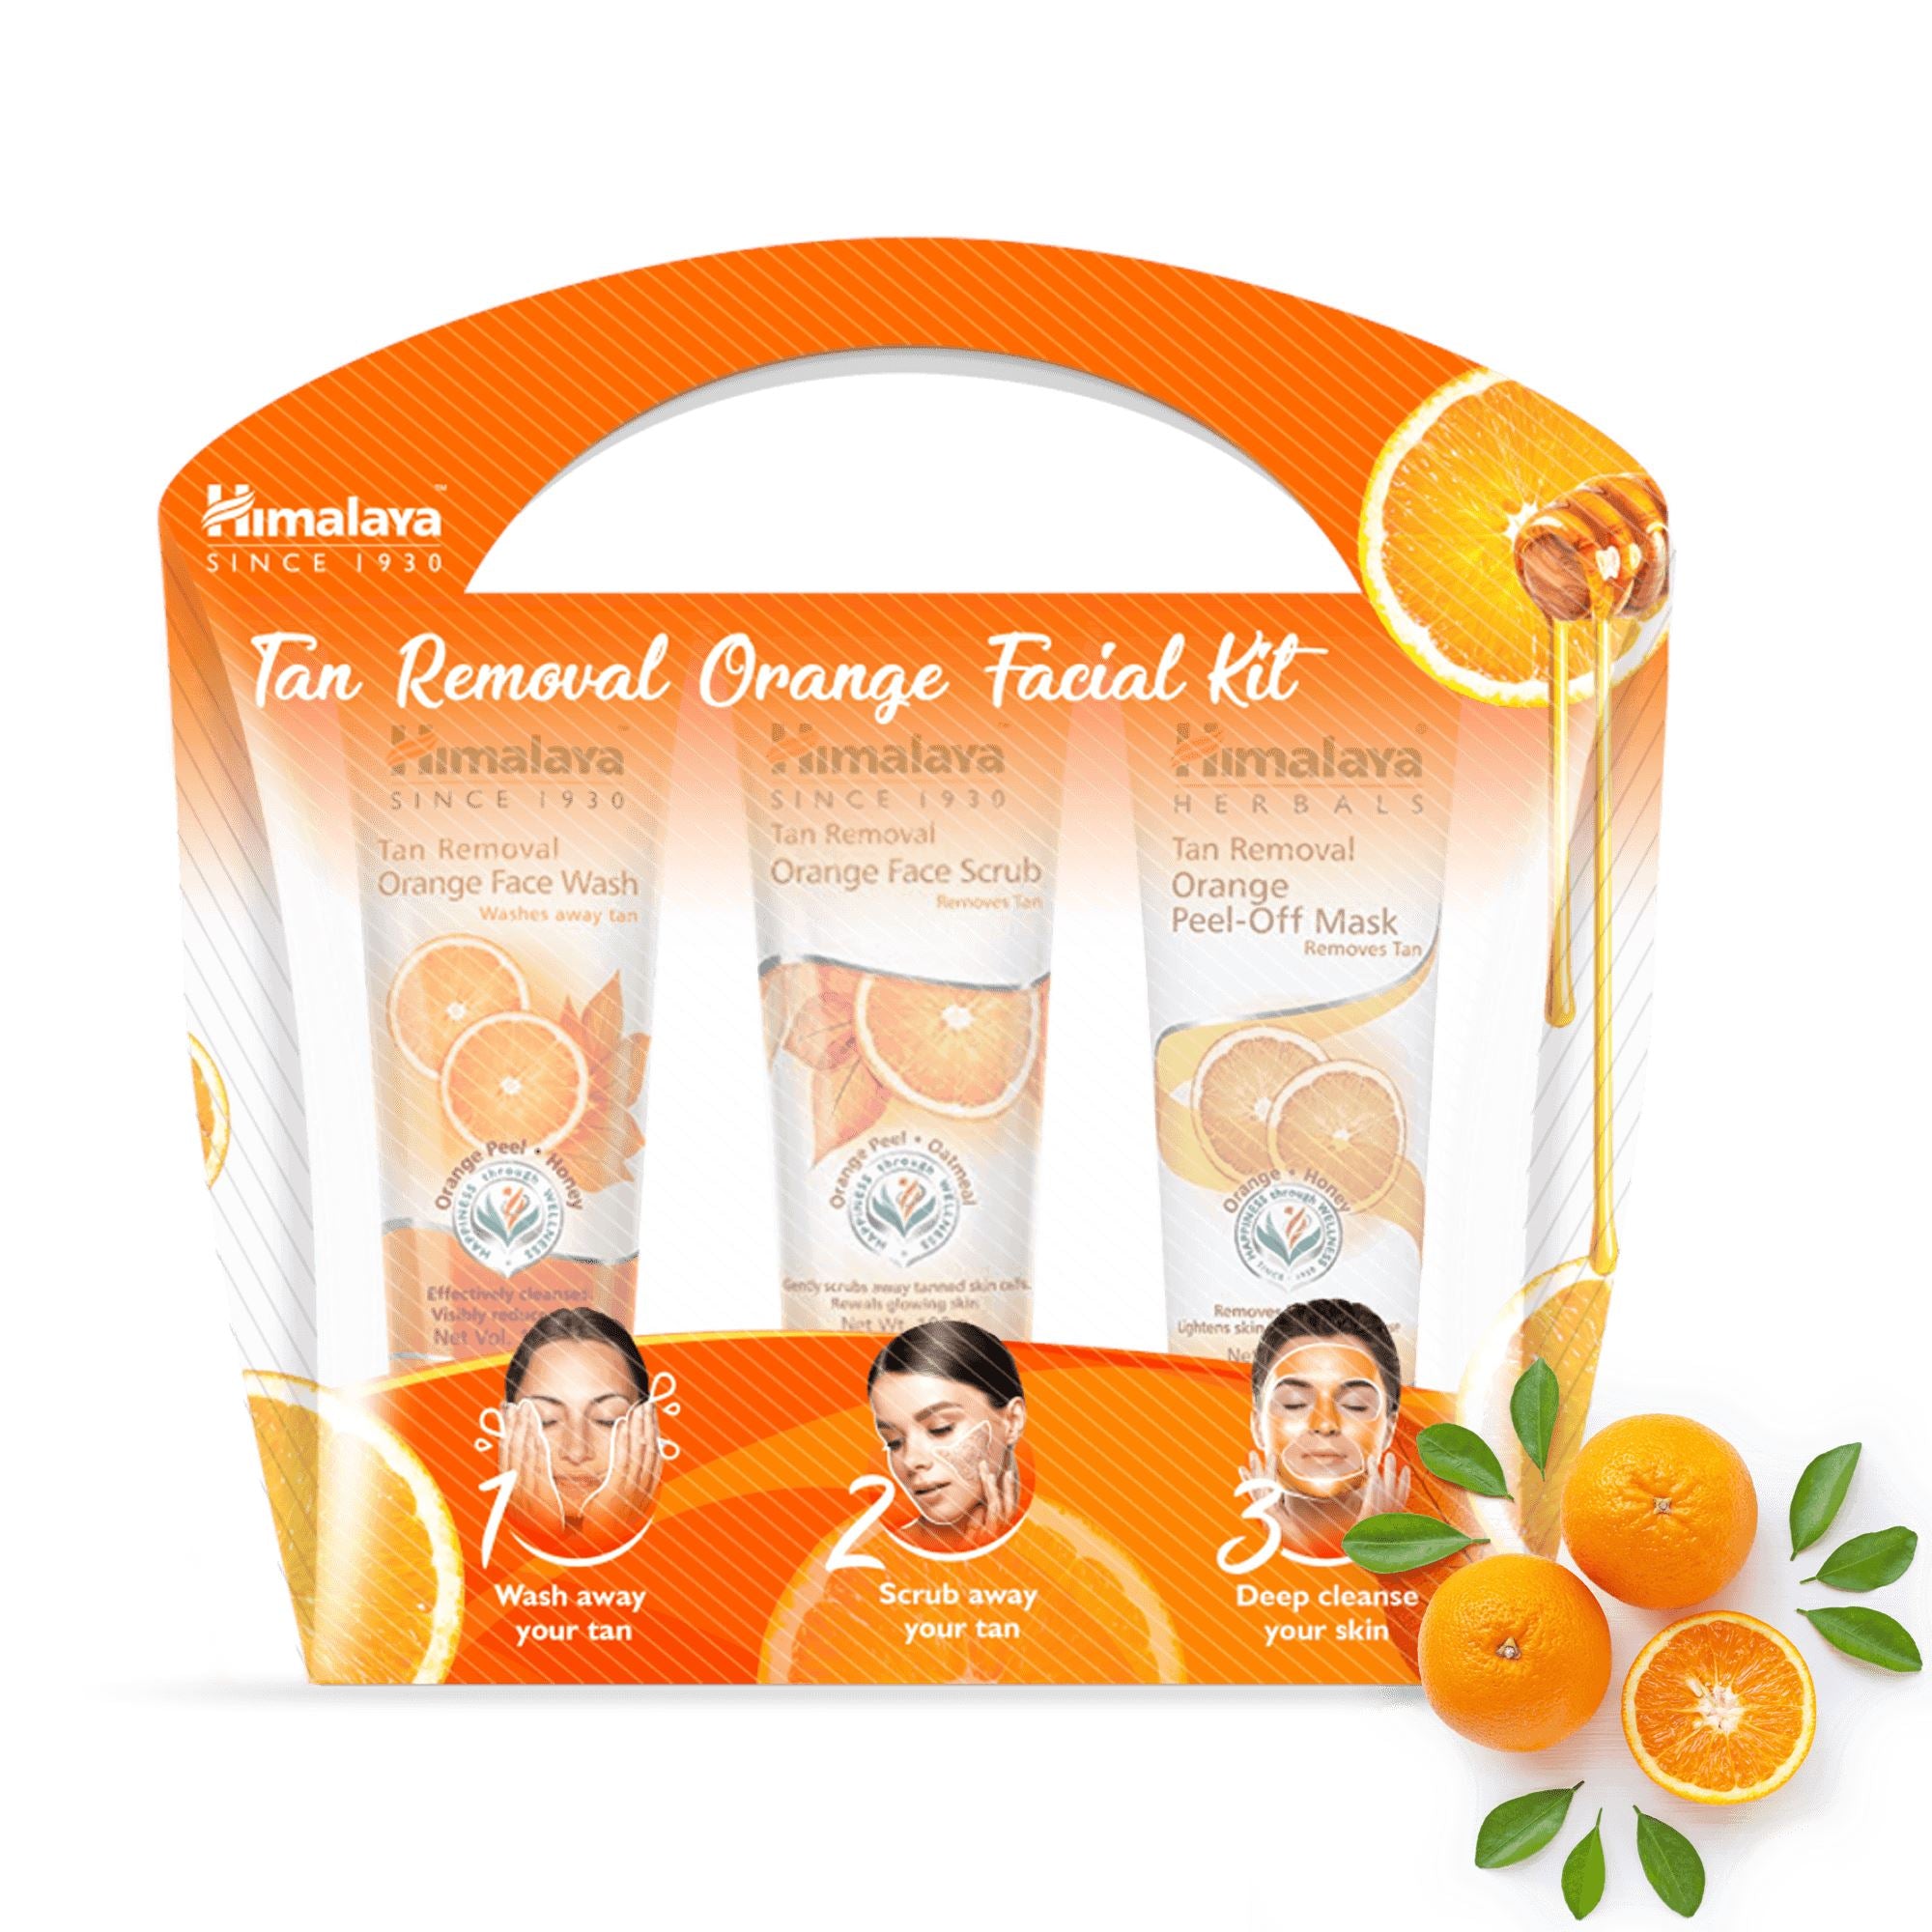 Himalaya Tan Removal Orange Facial Kit - Tan Removal Orange face wash, face scrub, and peel-off mask